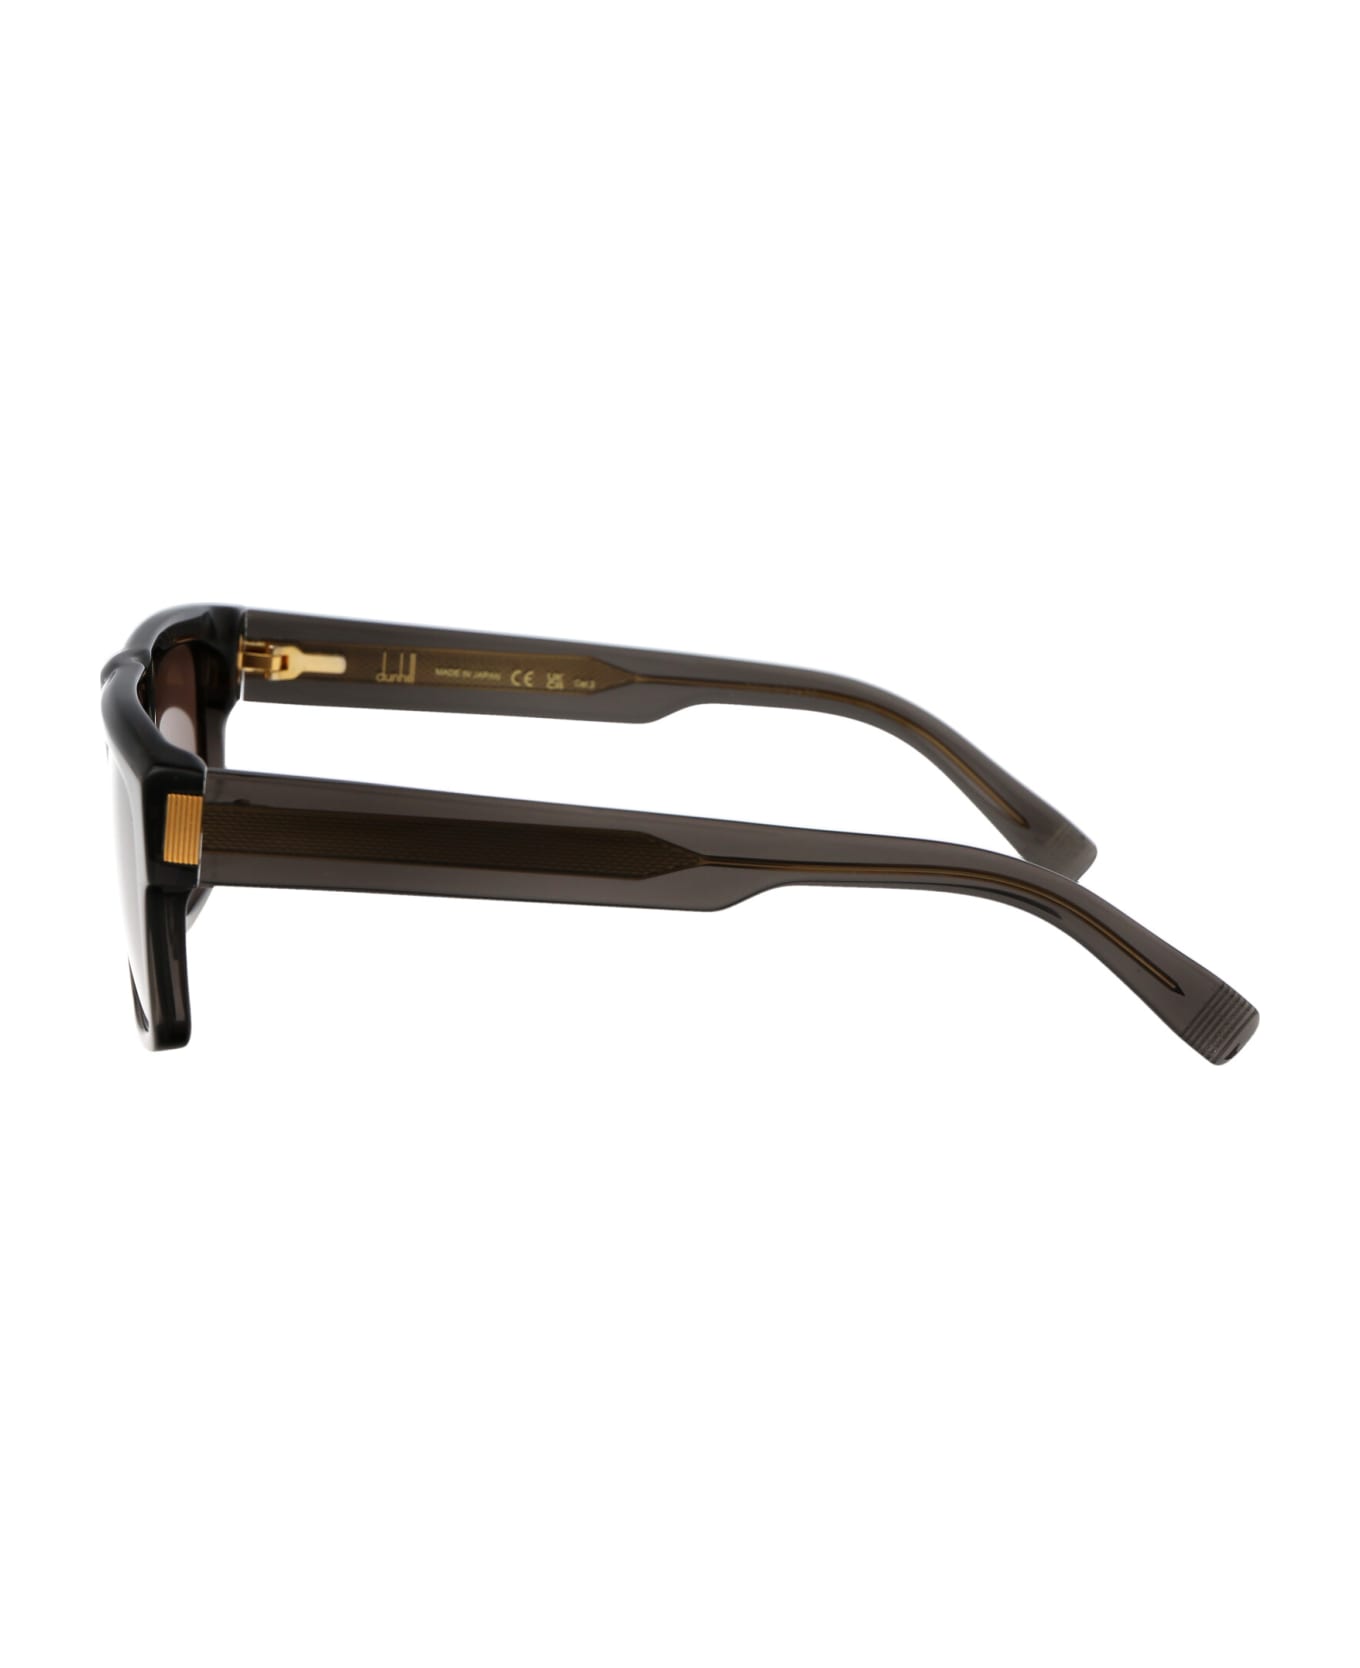 Dunhill Du0055s Sunglasses - 004 Eyewear GG1001SK Sunglasses